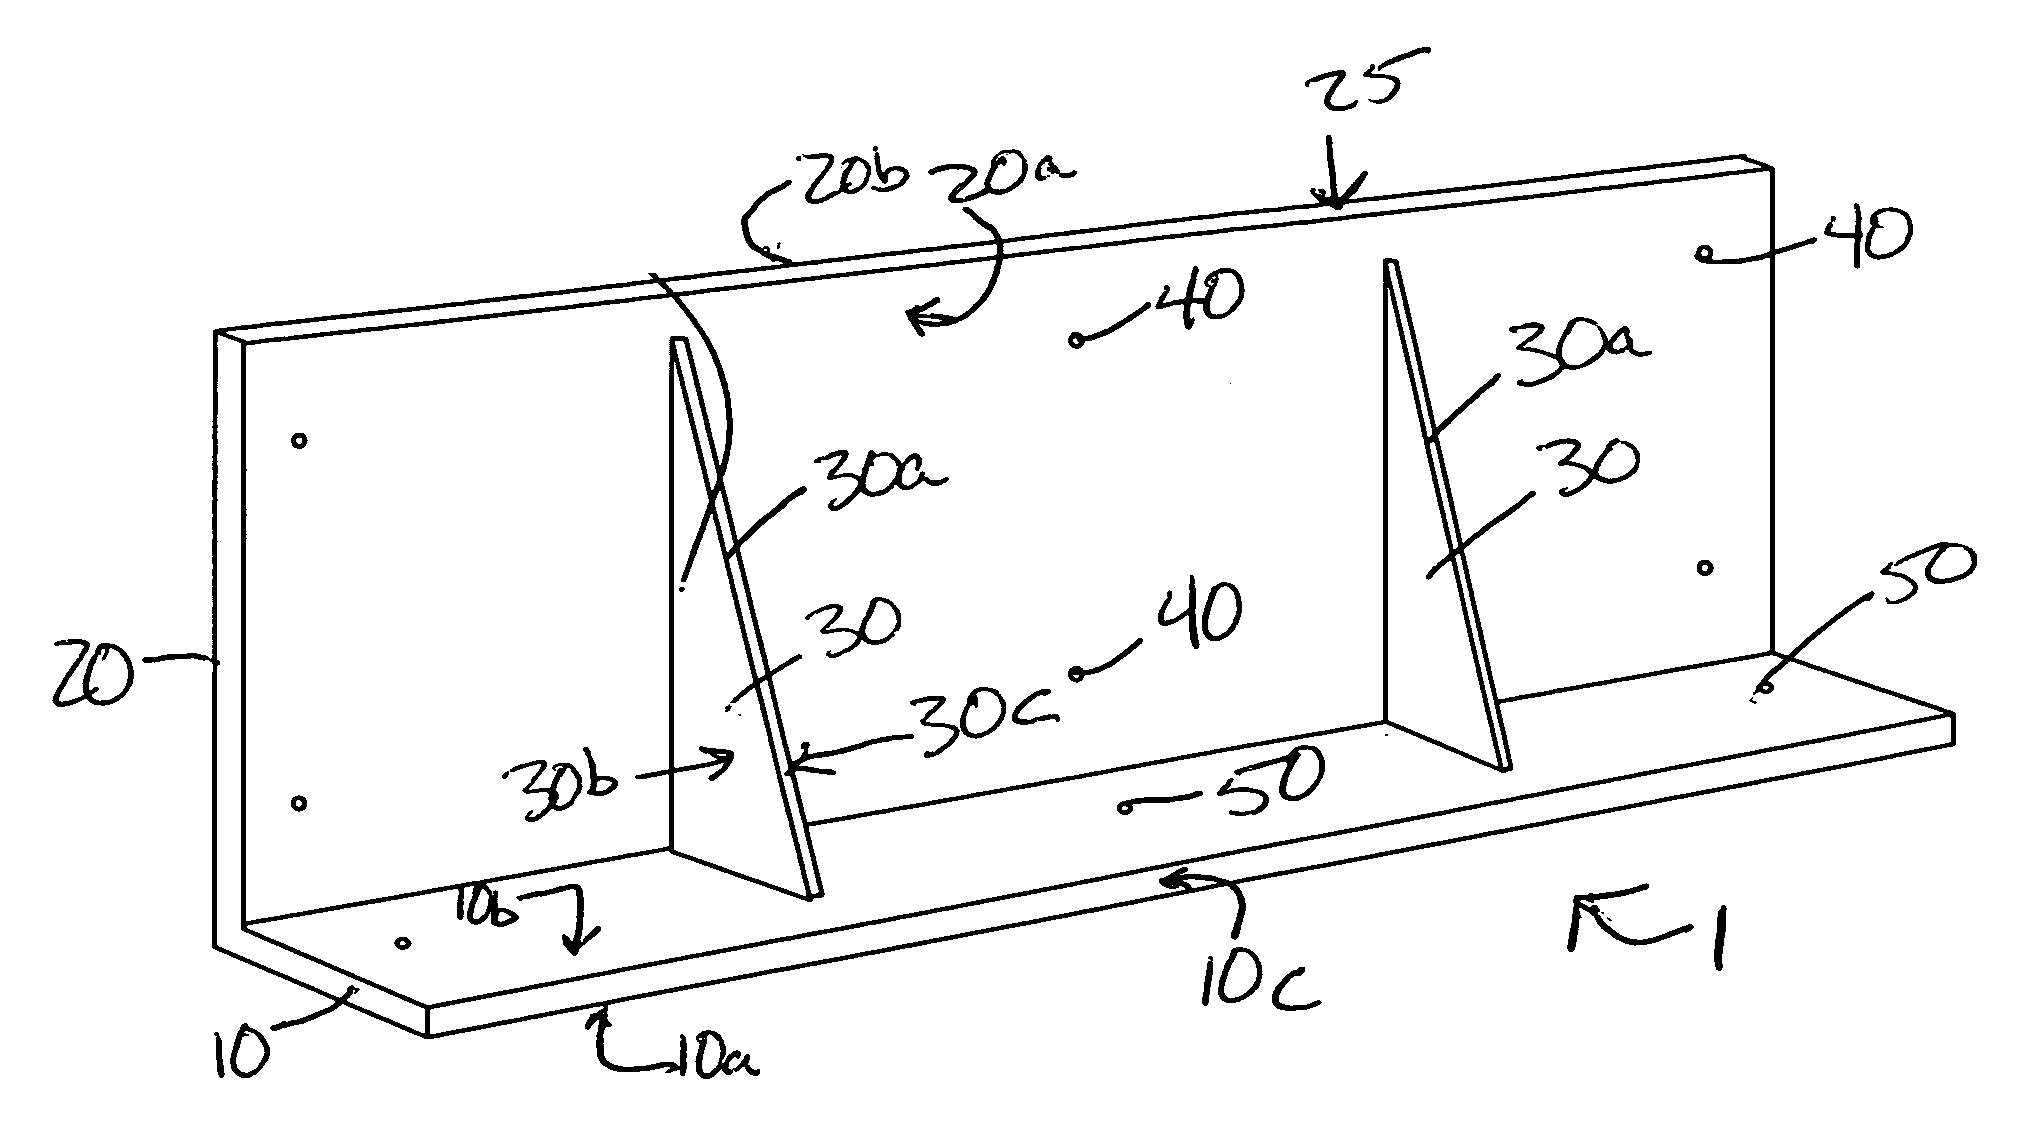 Composite lintel system